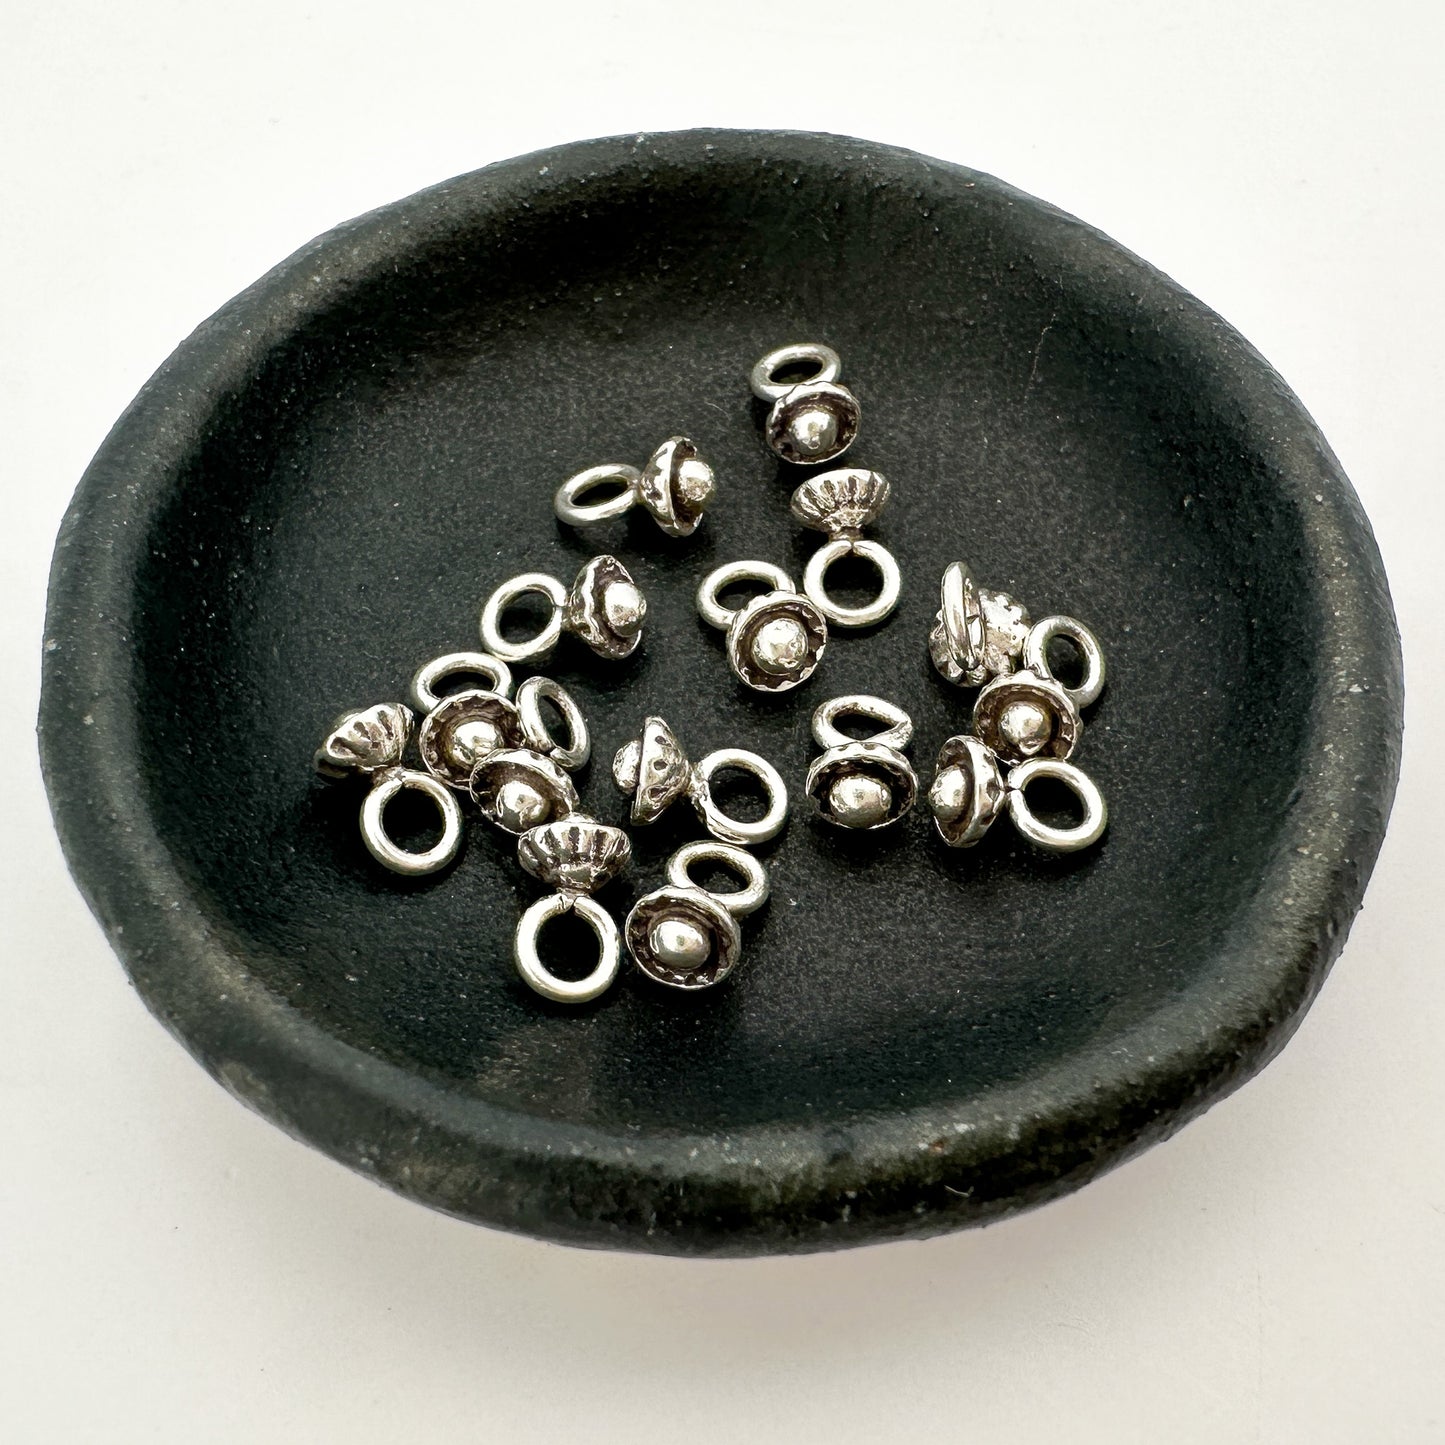 Tiny Pod Flower Charm (Sterling Silver) Charm - 1 pc. (M1920)